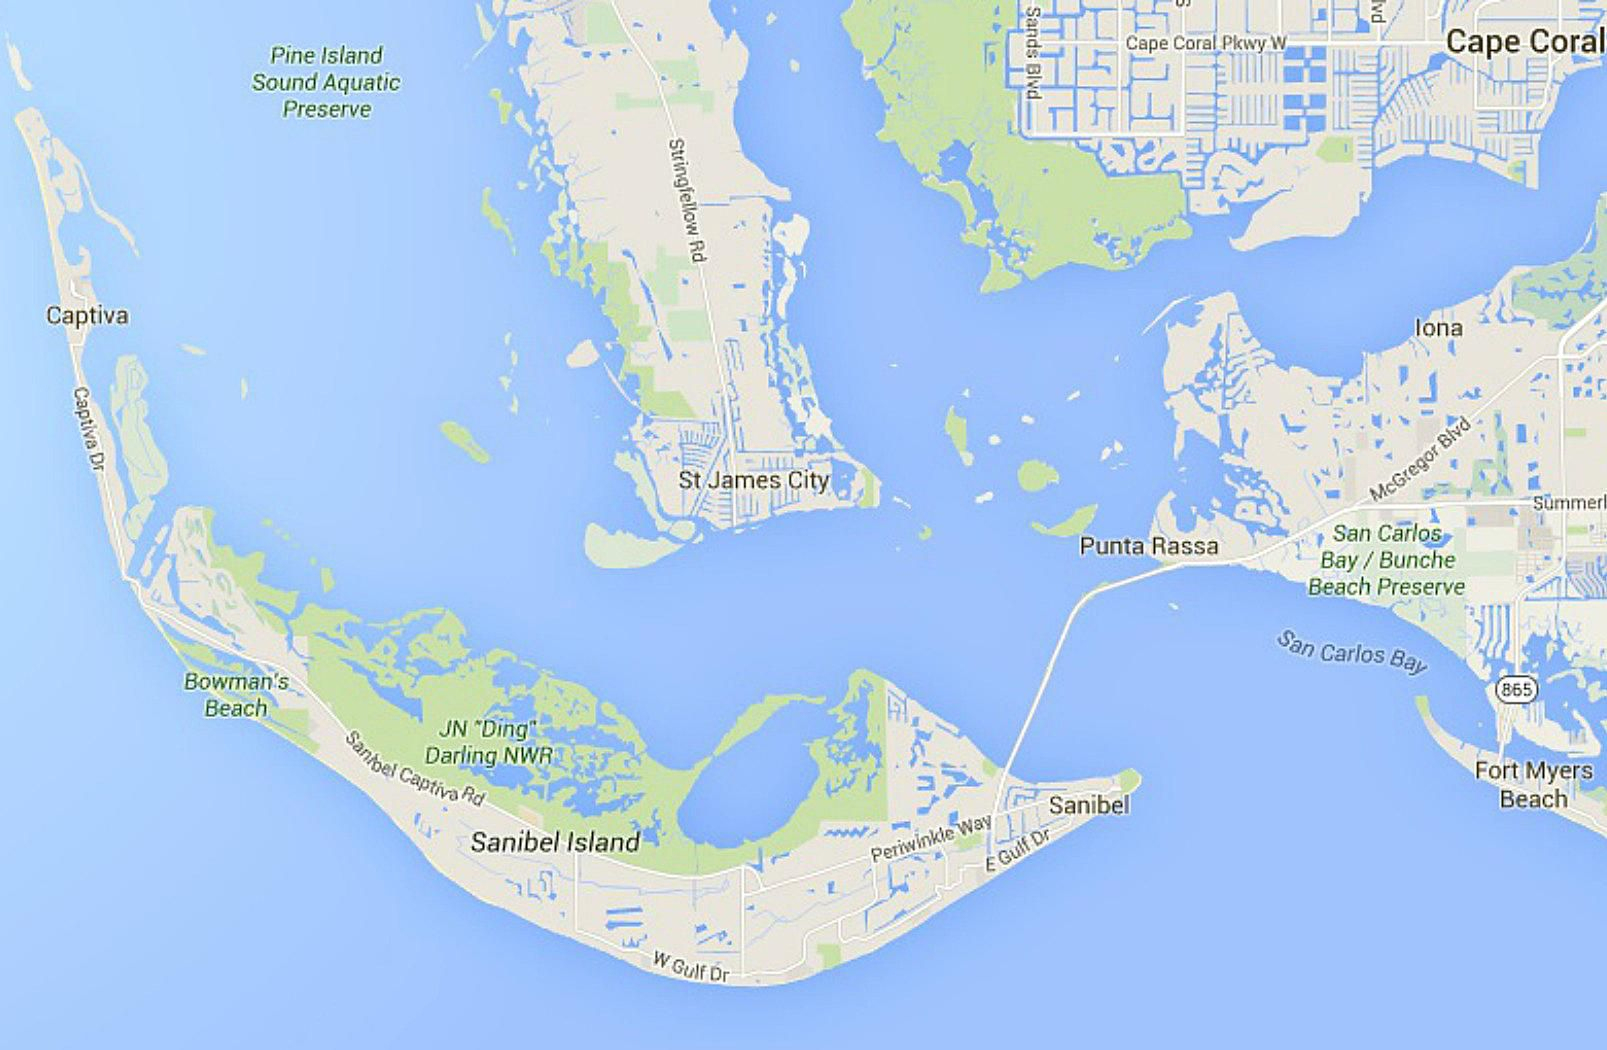 Maps Of Florida: Orlando, Tampa, Miami, Keys, And More - Google Maps West Palm Beach Florida